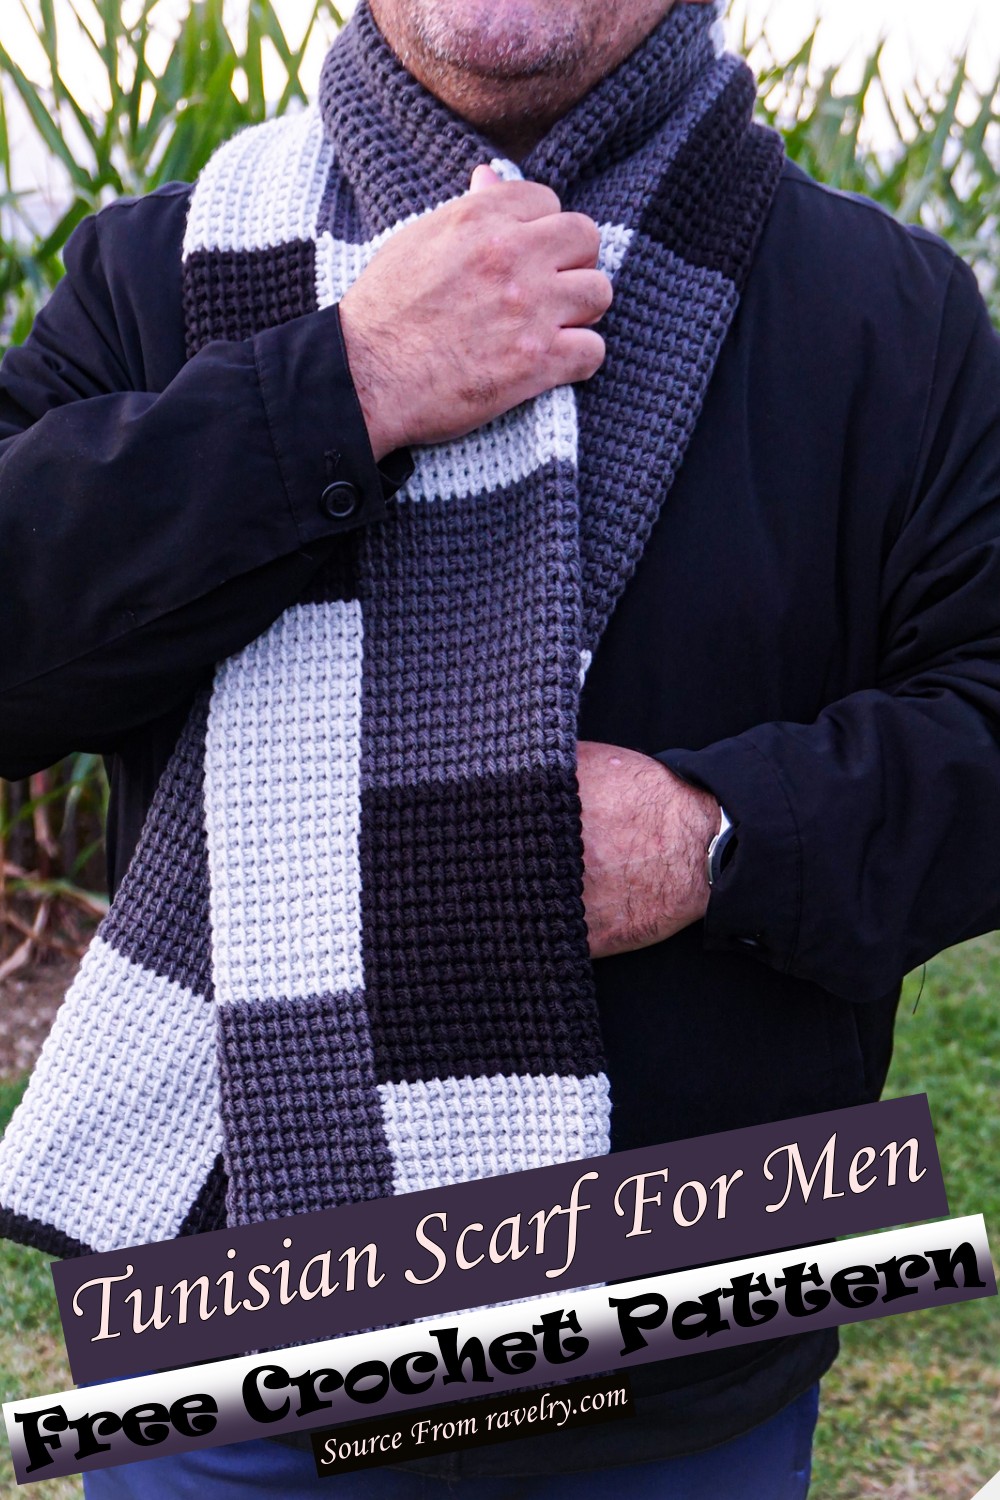 Free Crochet Tunisian Scarf For Men Pattern